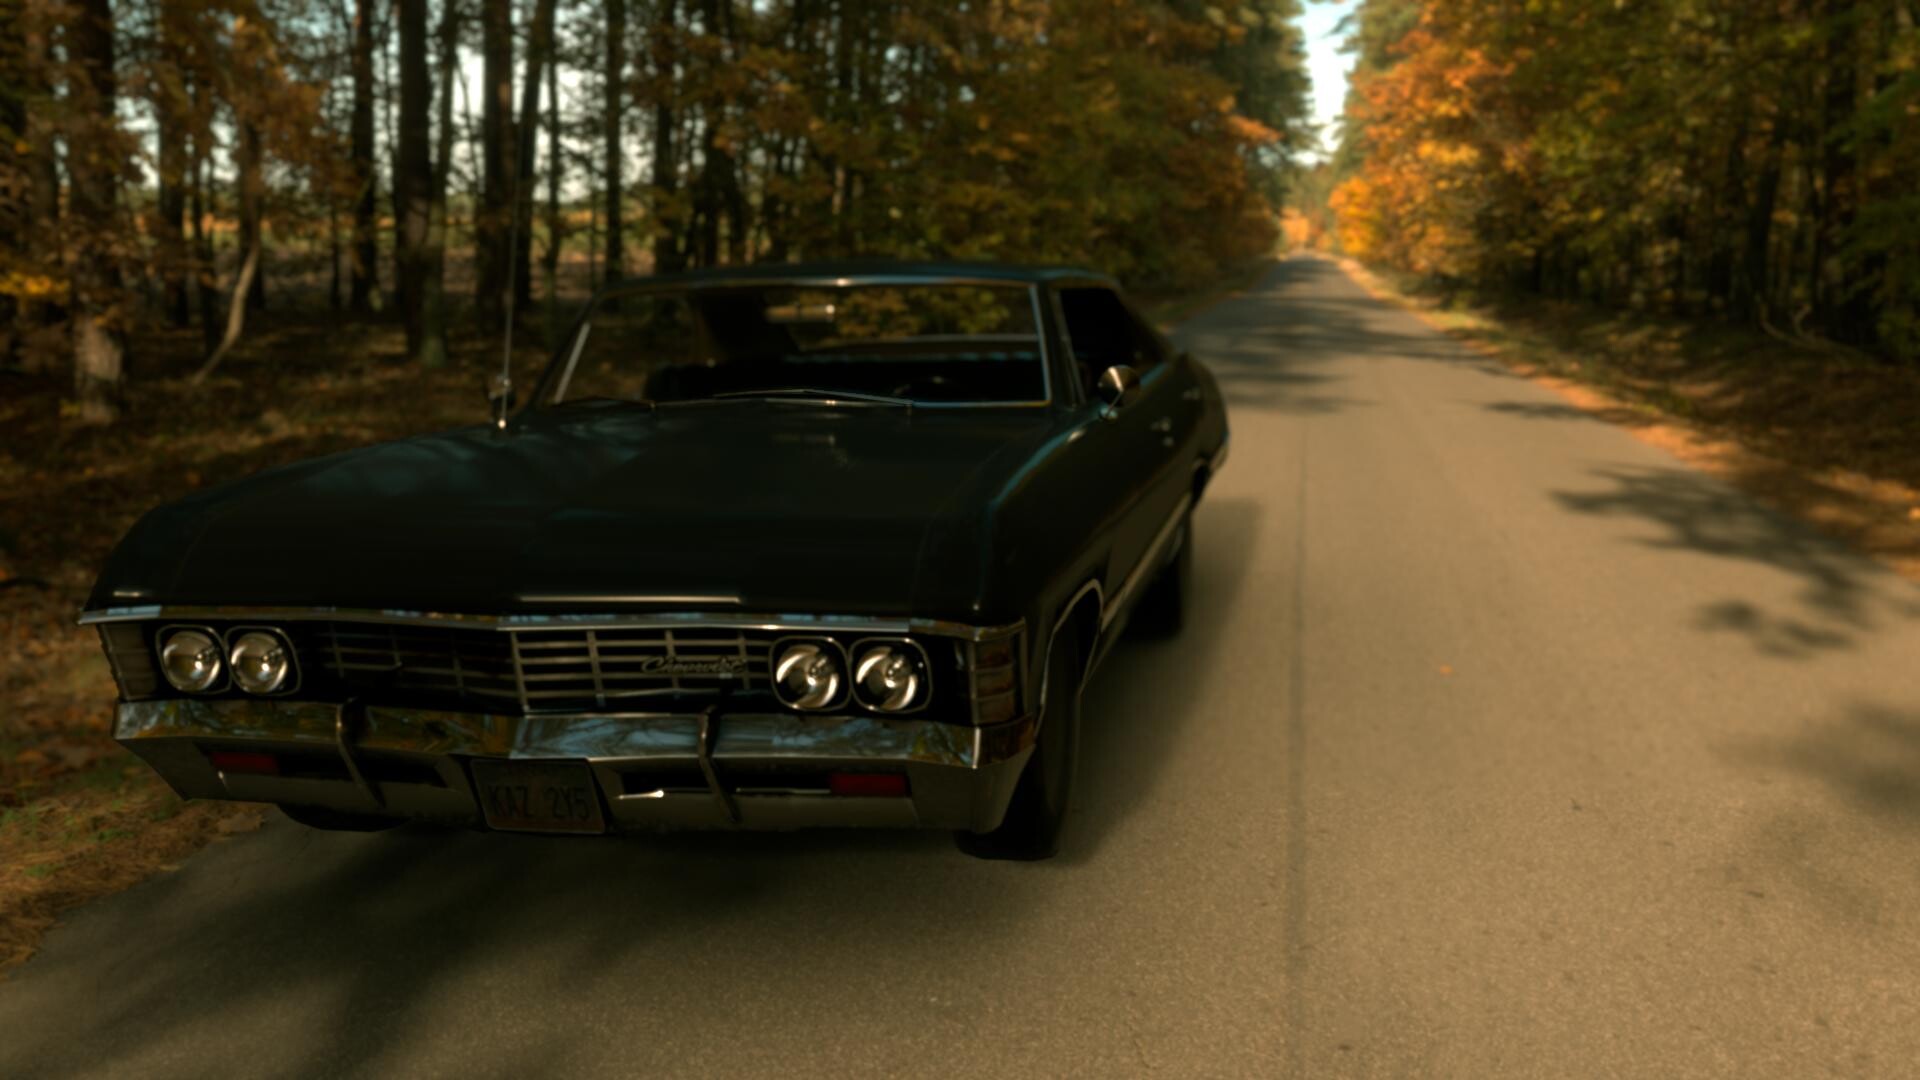 ArtStation - Chevrolet Impala 67 in Autumn